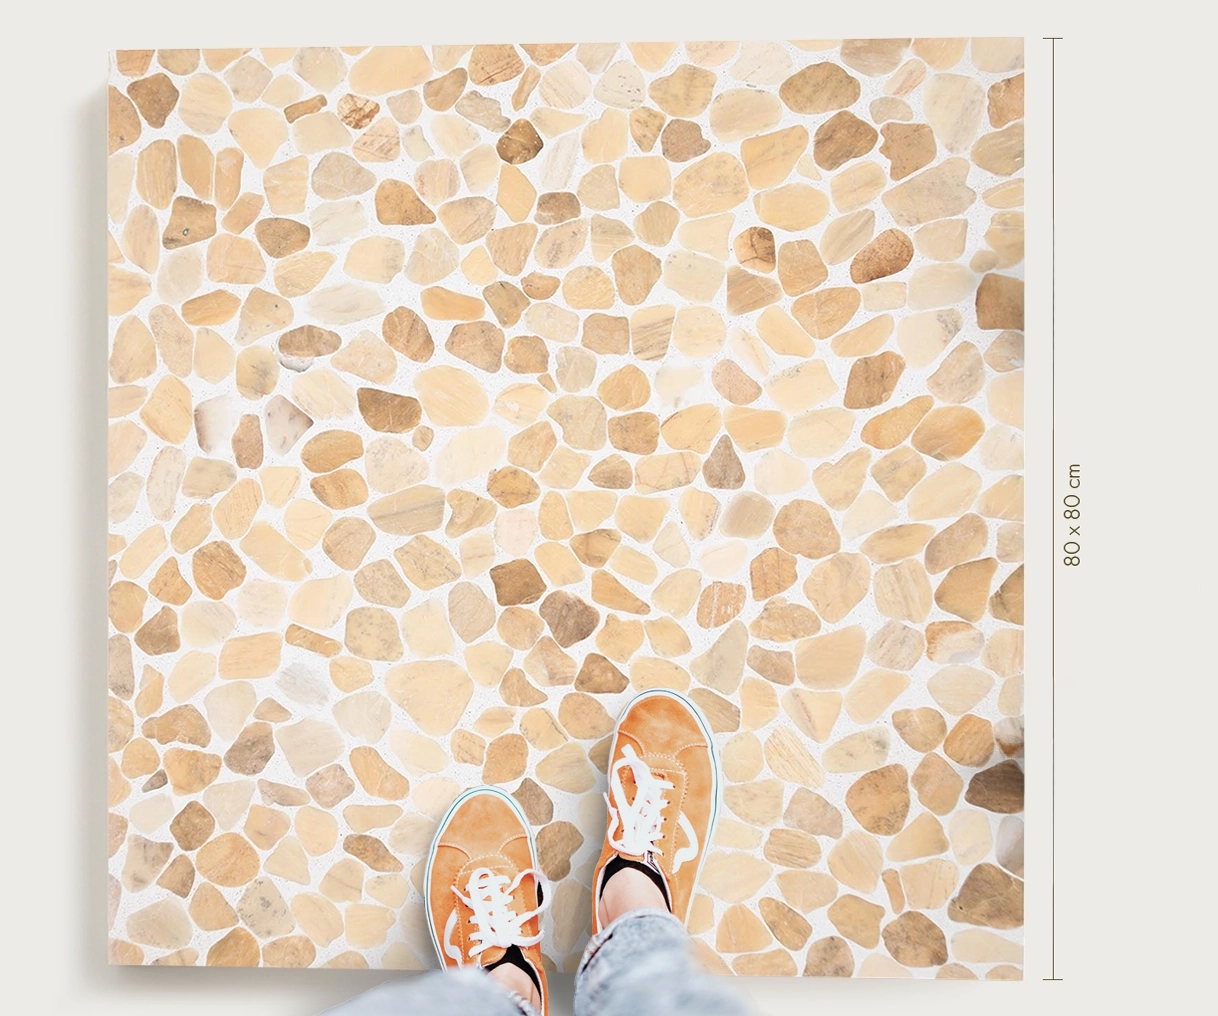 Terrazzo tiles in white, cream, and beige